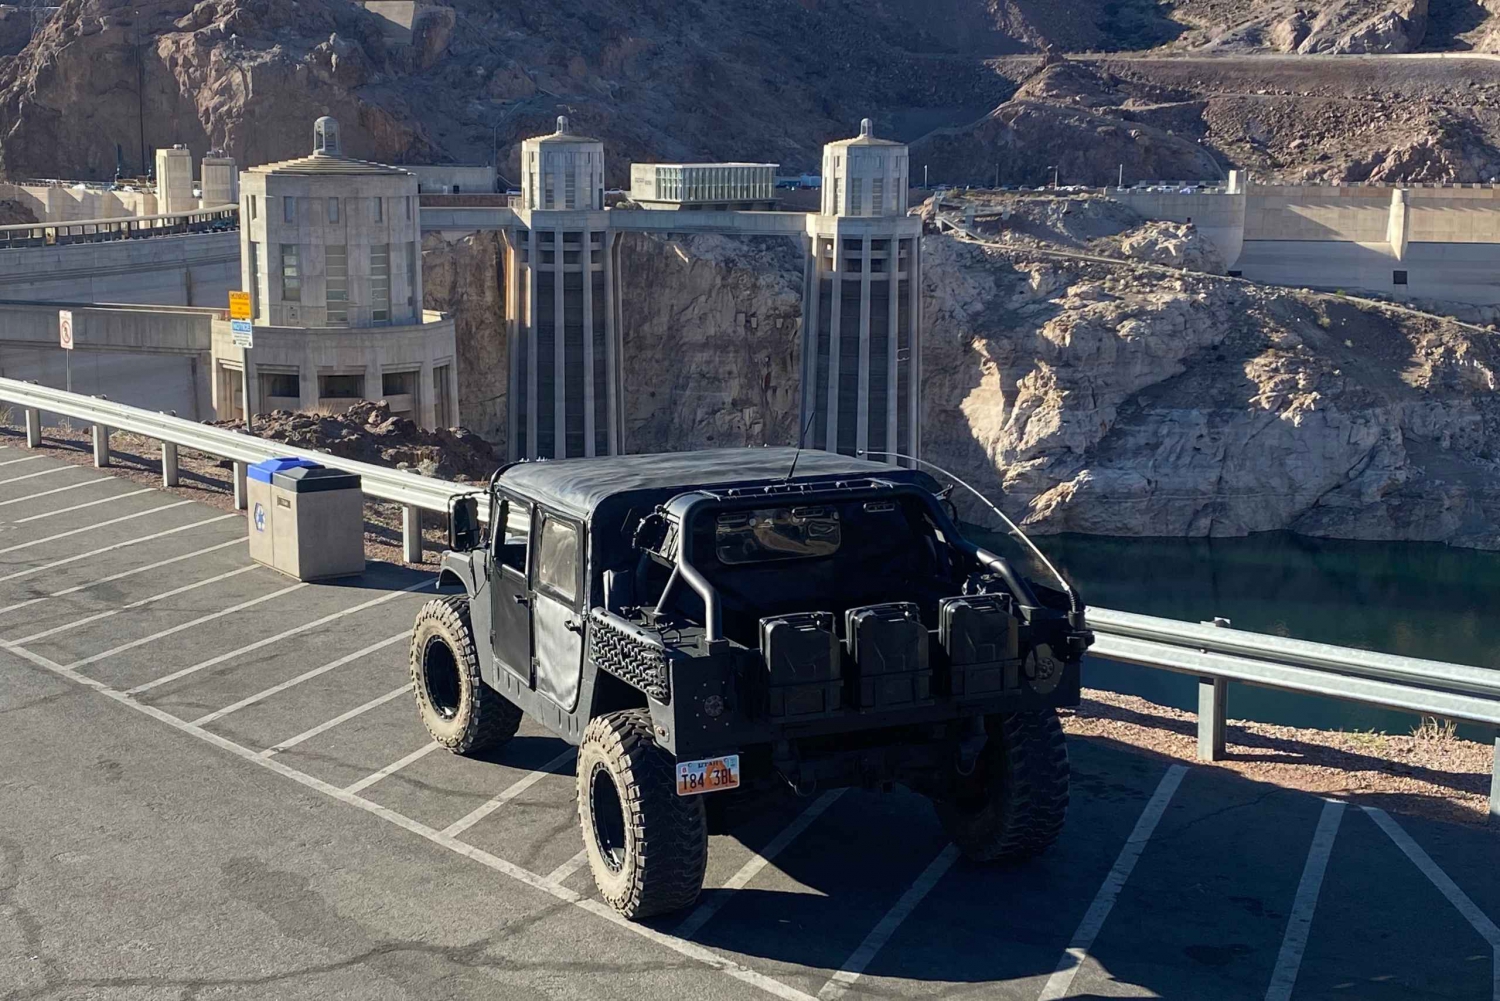 Fra Las Vegas: Hoover Dam & Lake Mead Military Hummer Tour